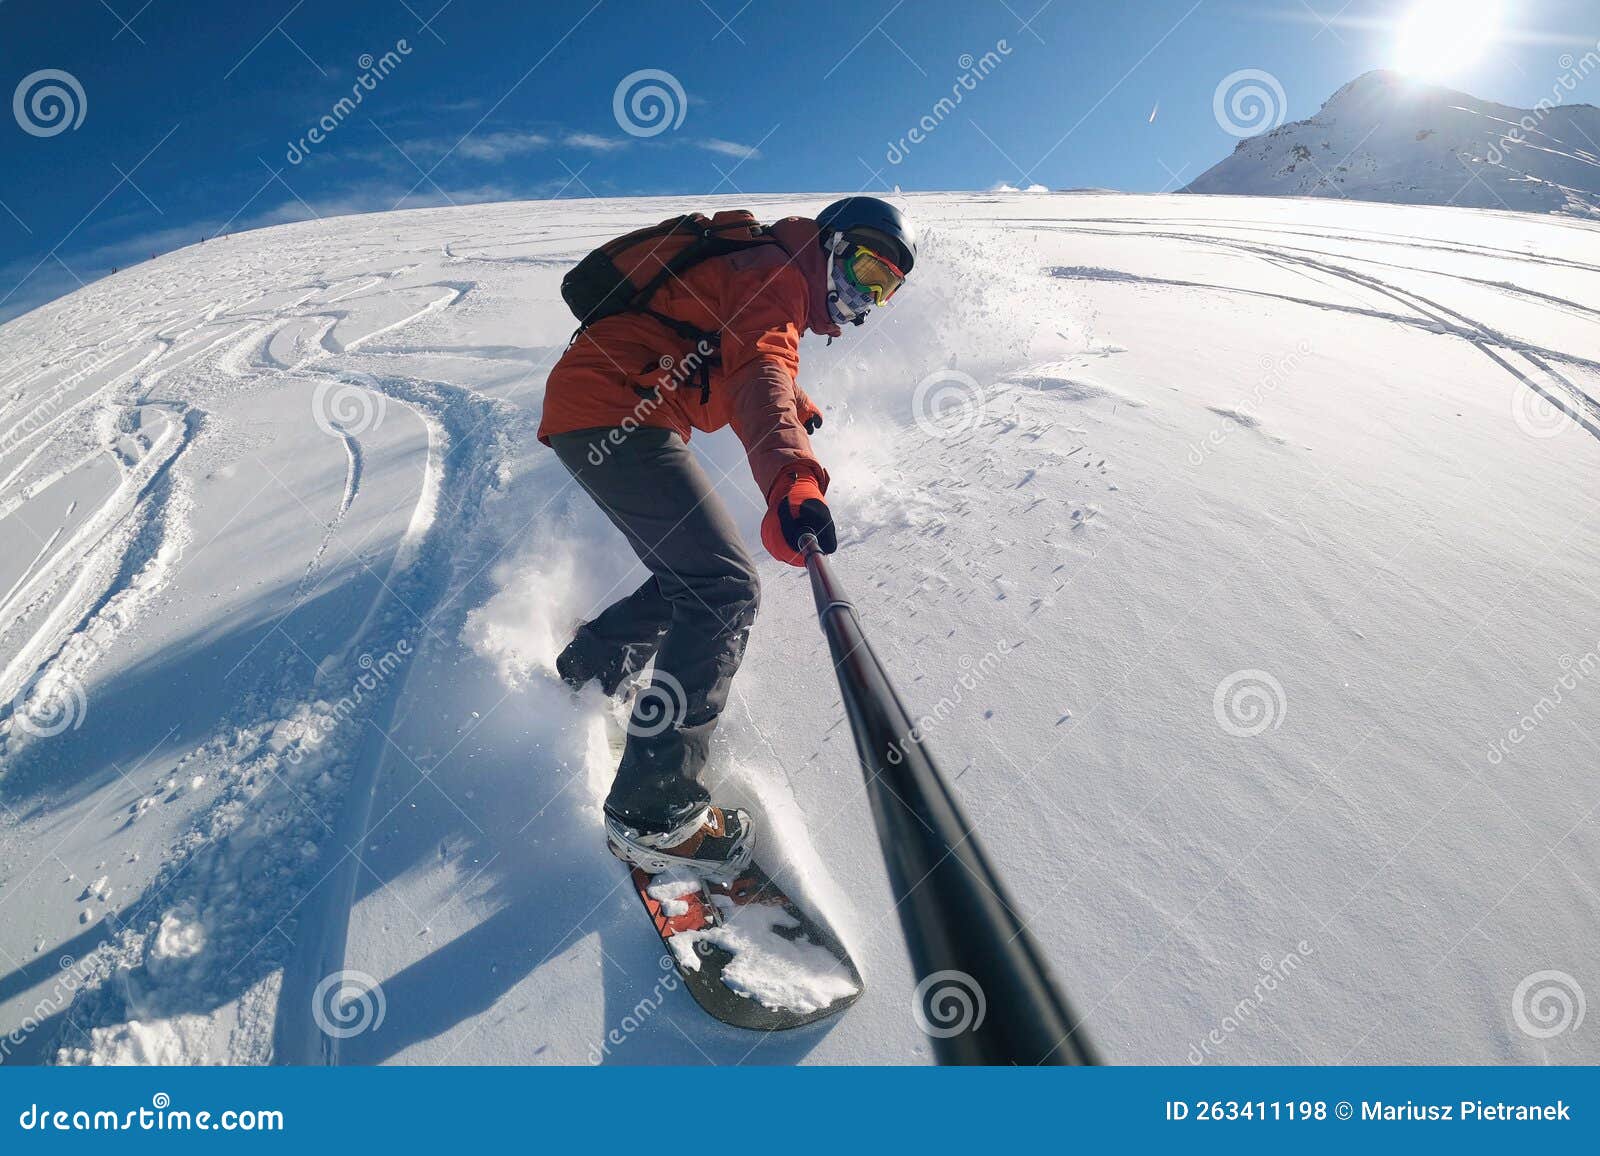 Freeride Powder, Snowboarding in Alpes Resort in Winter. Snowboard ...